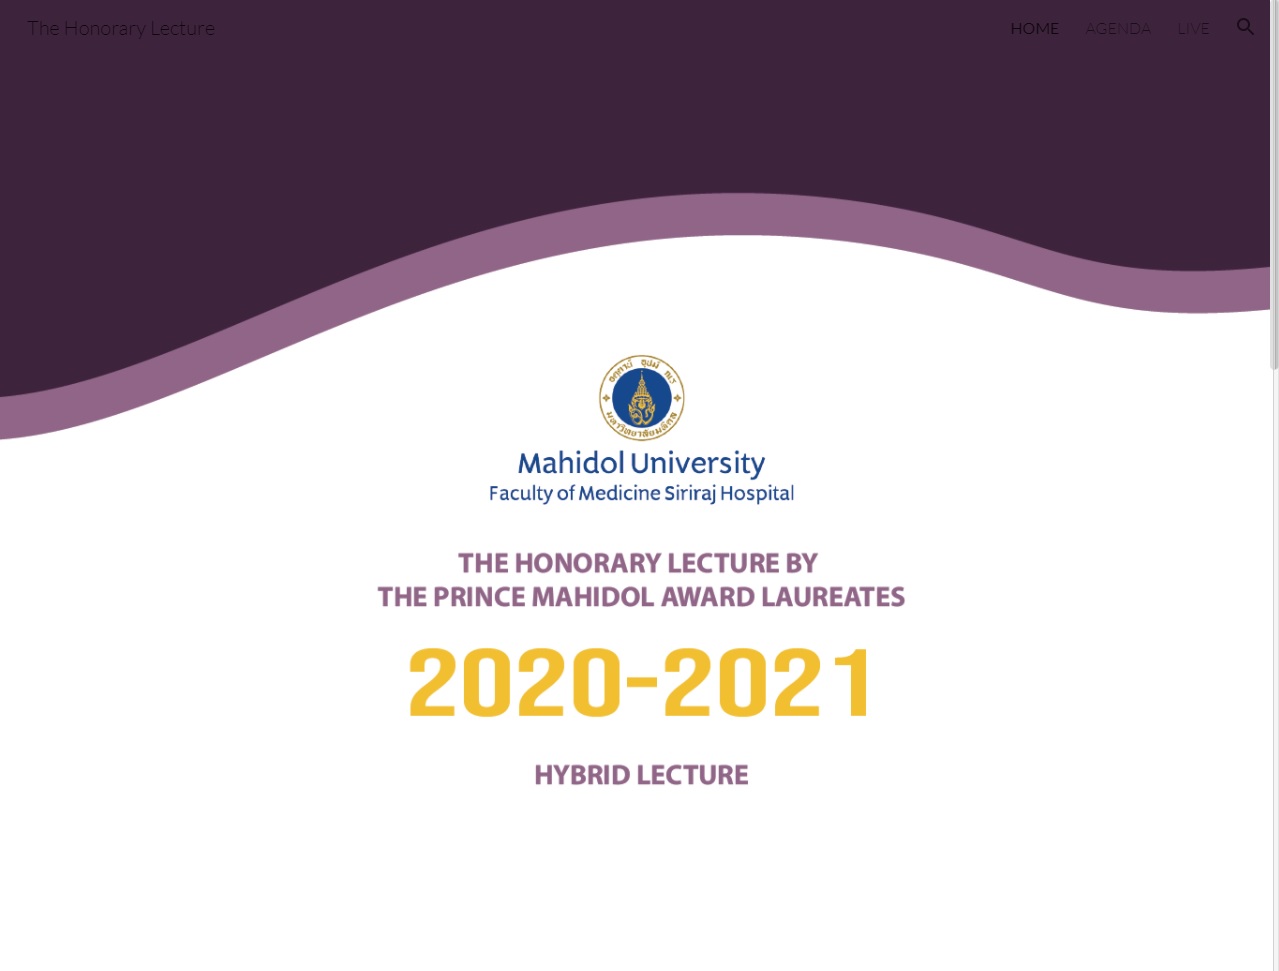 Prince Mahidol Award Laureates 2020 – 2021 Honorary Lecture